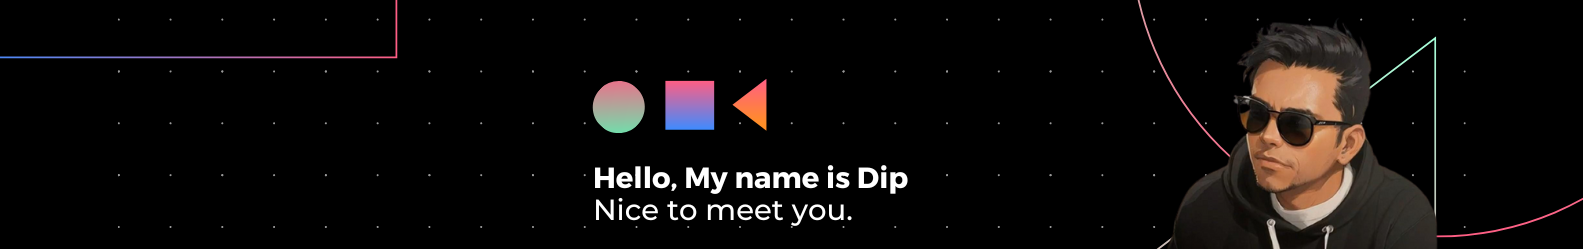 Dip Das's profile banner